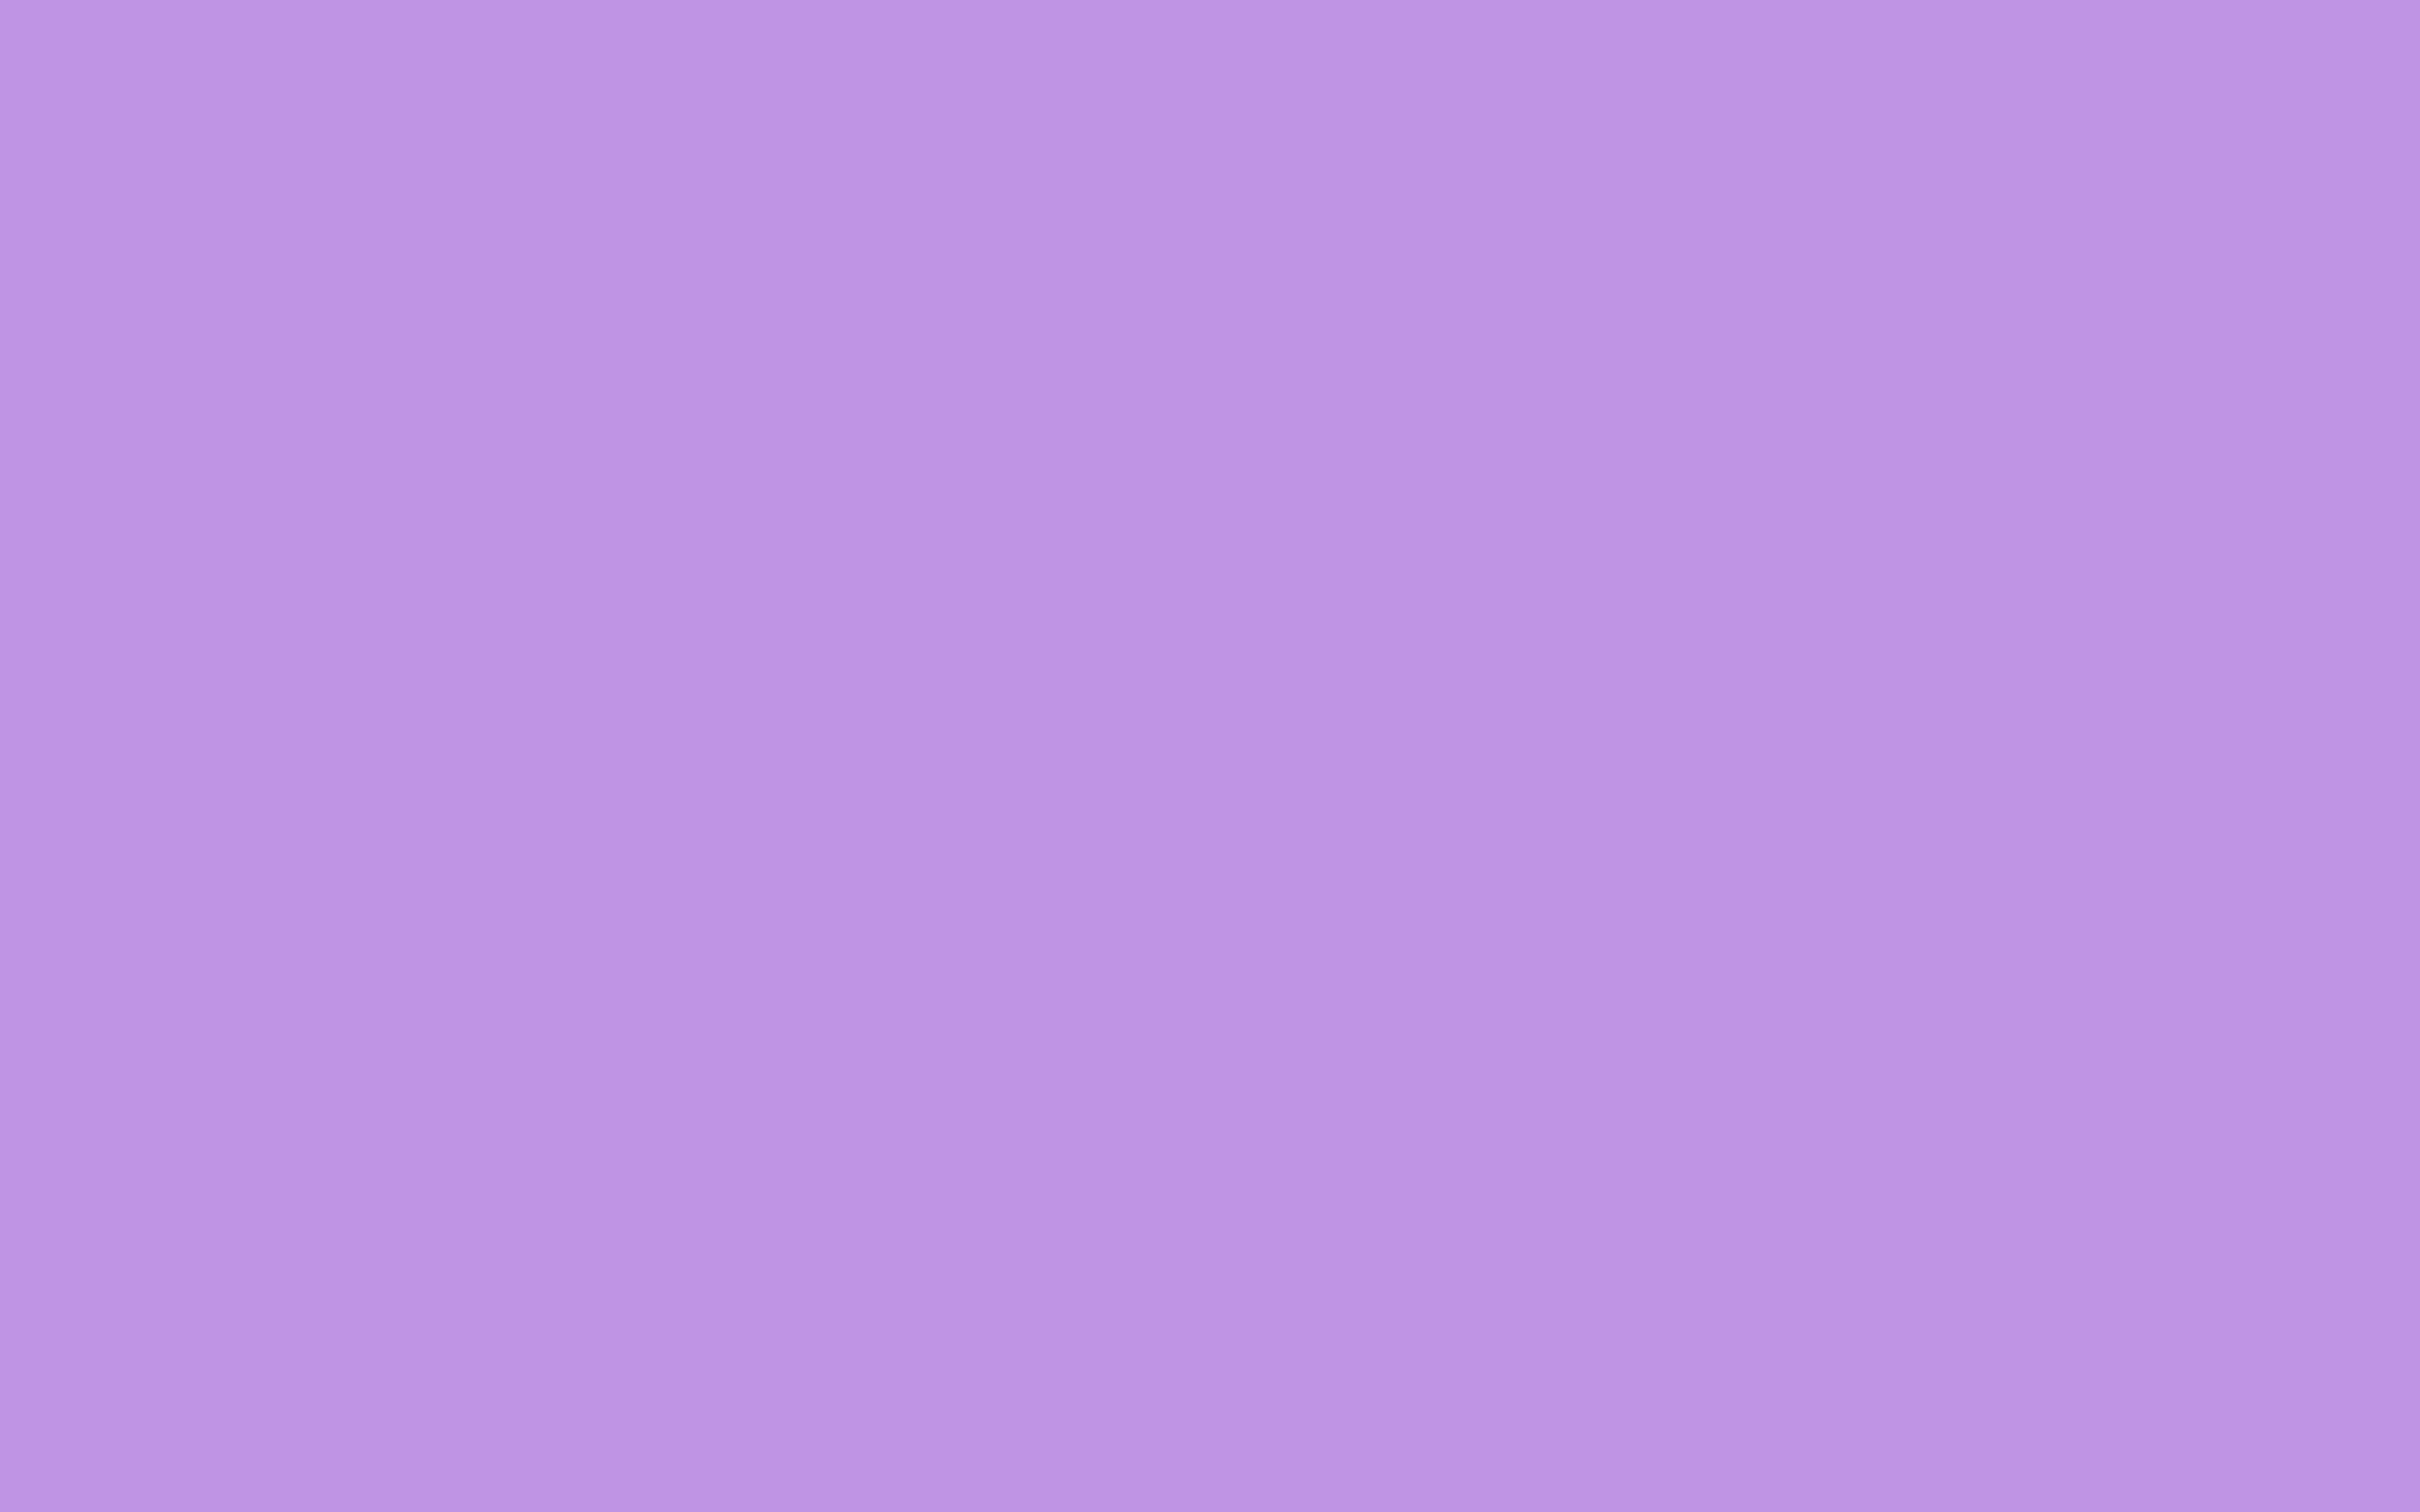 Background Color Solid Lavender Bright Image